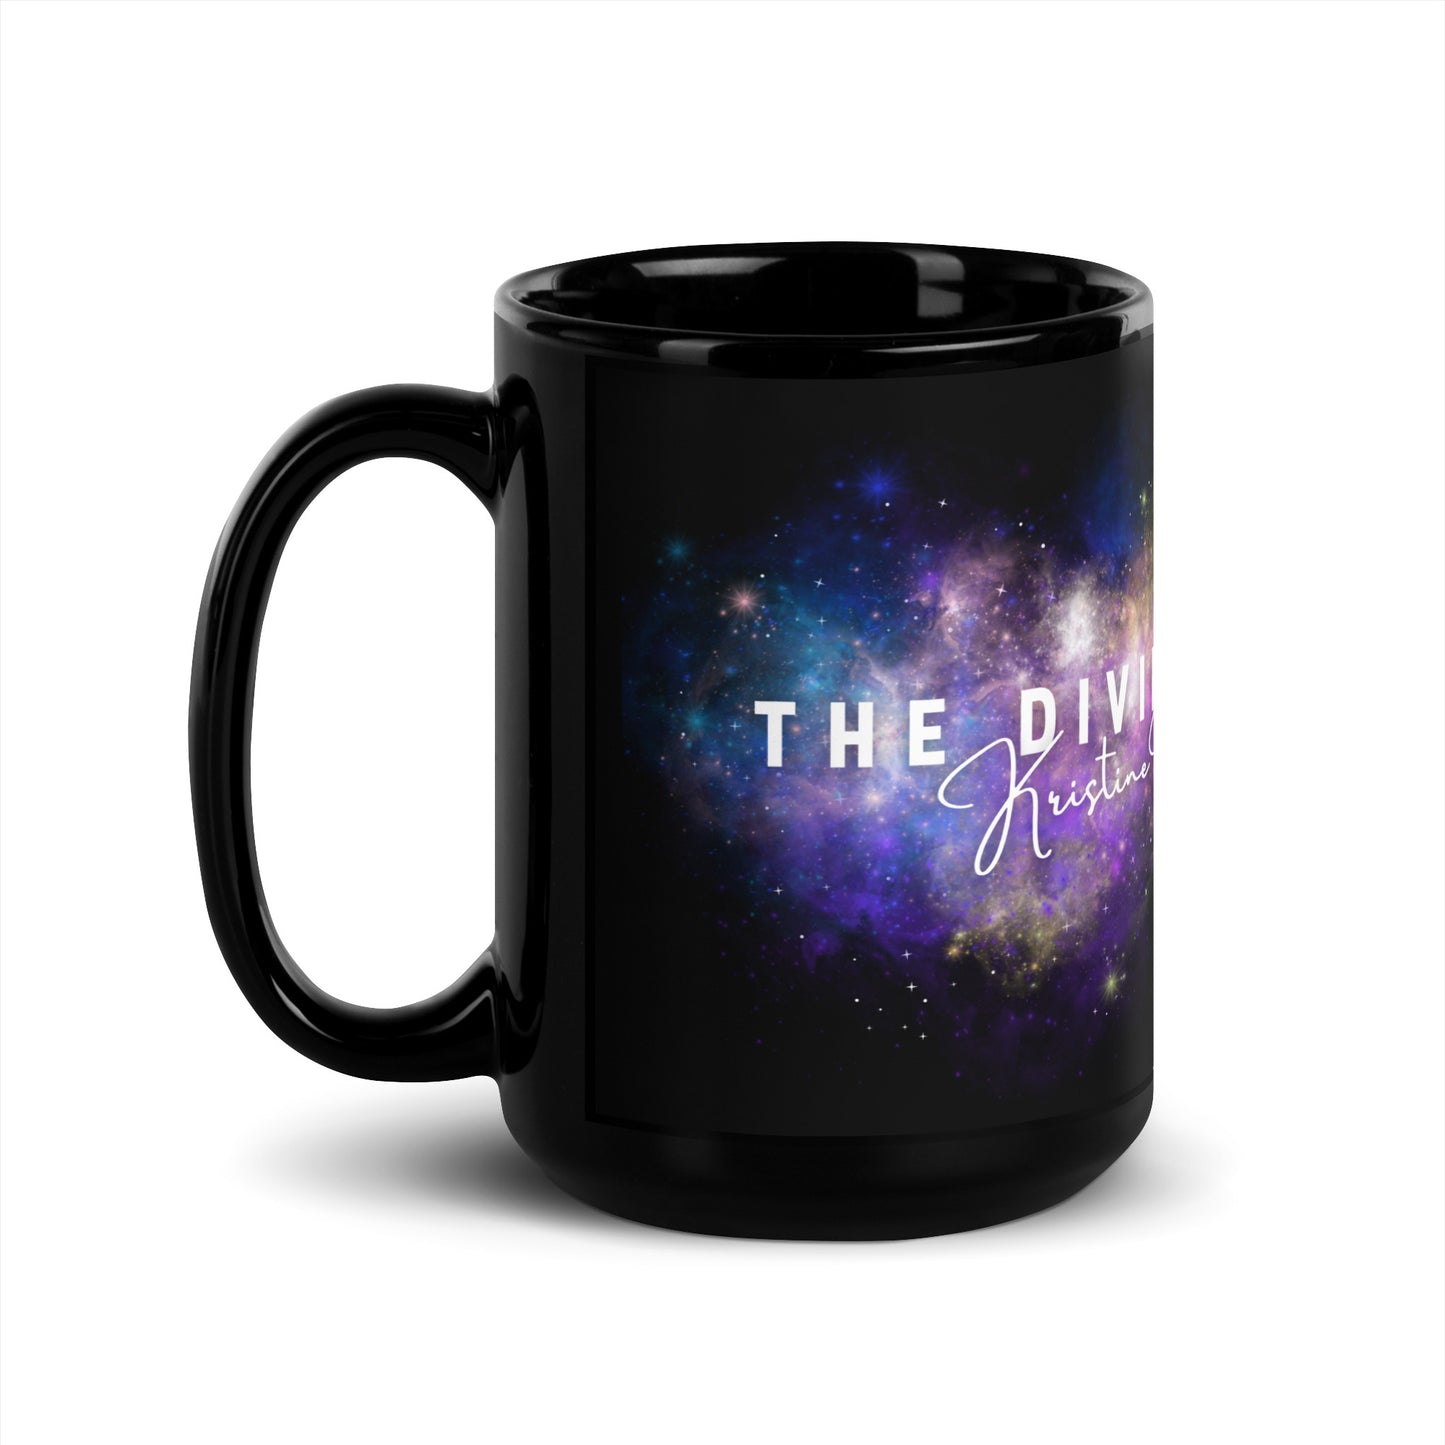 DIVING UNIVERSE NEBULA Black Glossy Mug - The Diving Universe by Kristine Kathryn Rusch